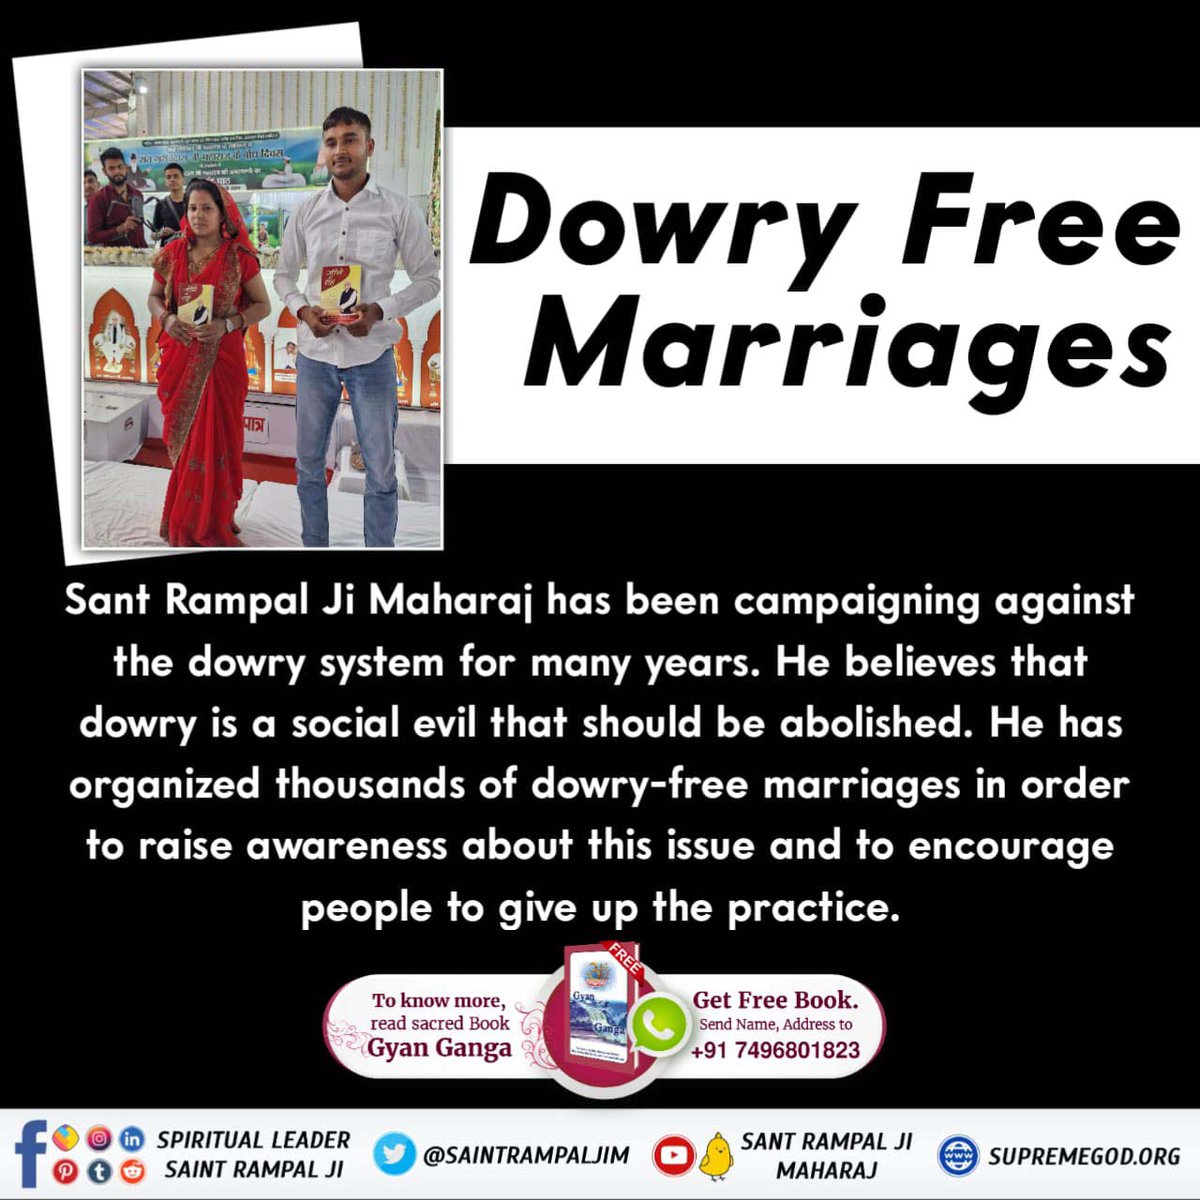 #Dowry #Dowrysystem #DowryFreeIndia #DowryFreeMarriages #bride #indianbride 
#viralvideos #weddingphotography
#viral #trending #hindu
#SaintRampalJiQuotes #SantRampalJiQuotes #SantRampalJiMaharaj
#SaintRampalJi